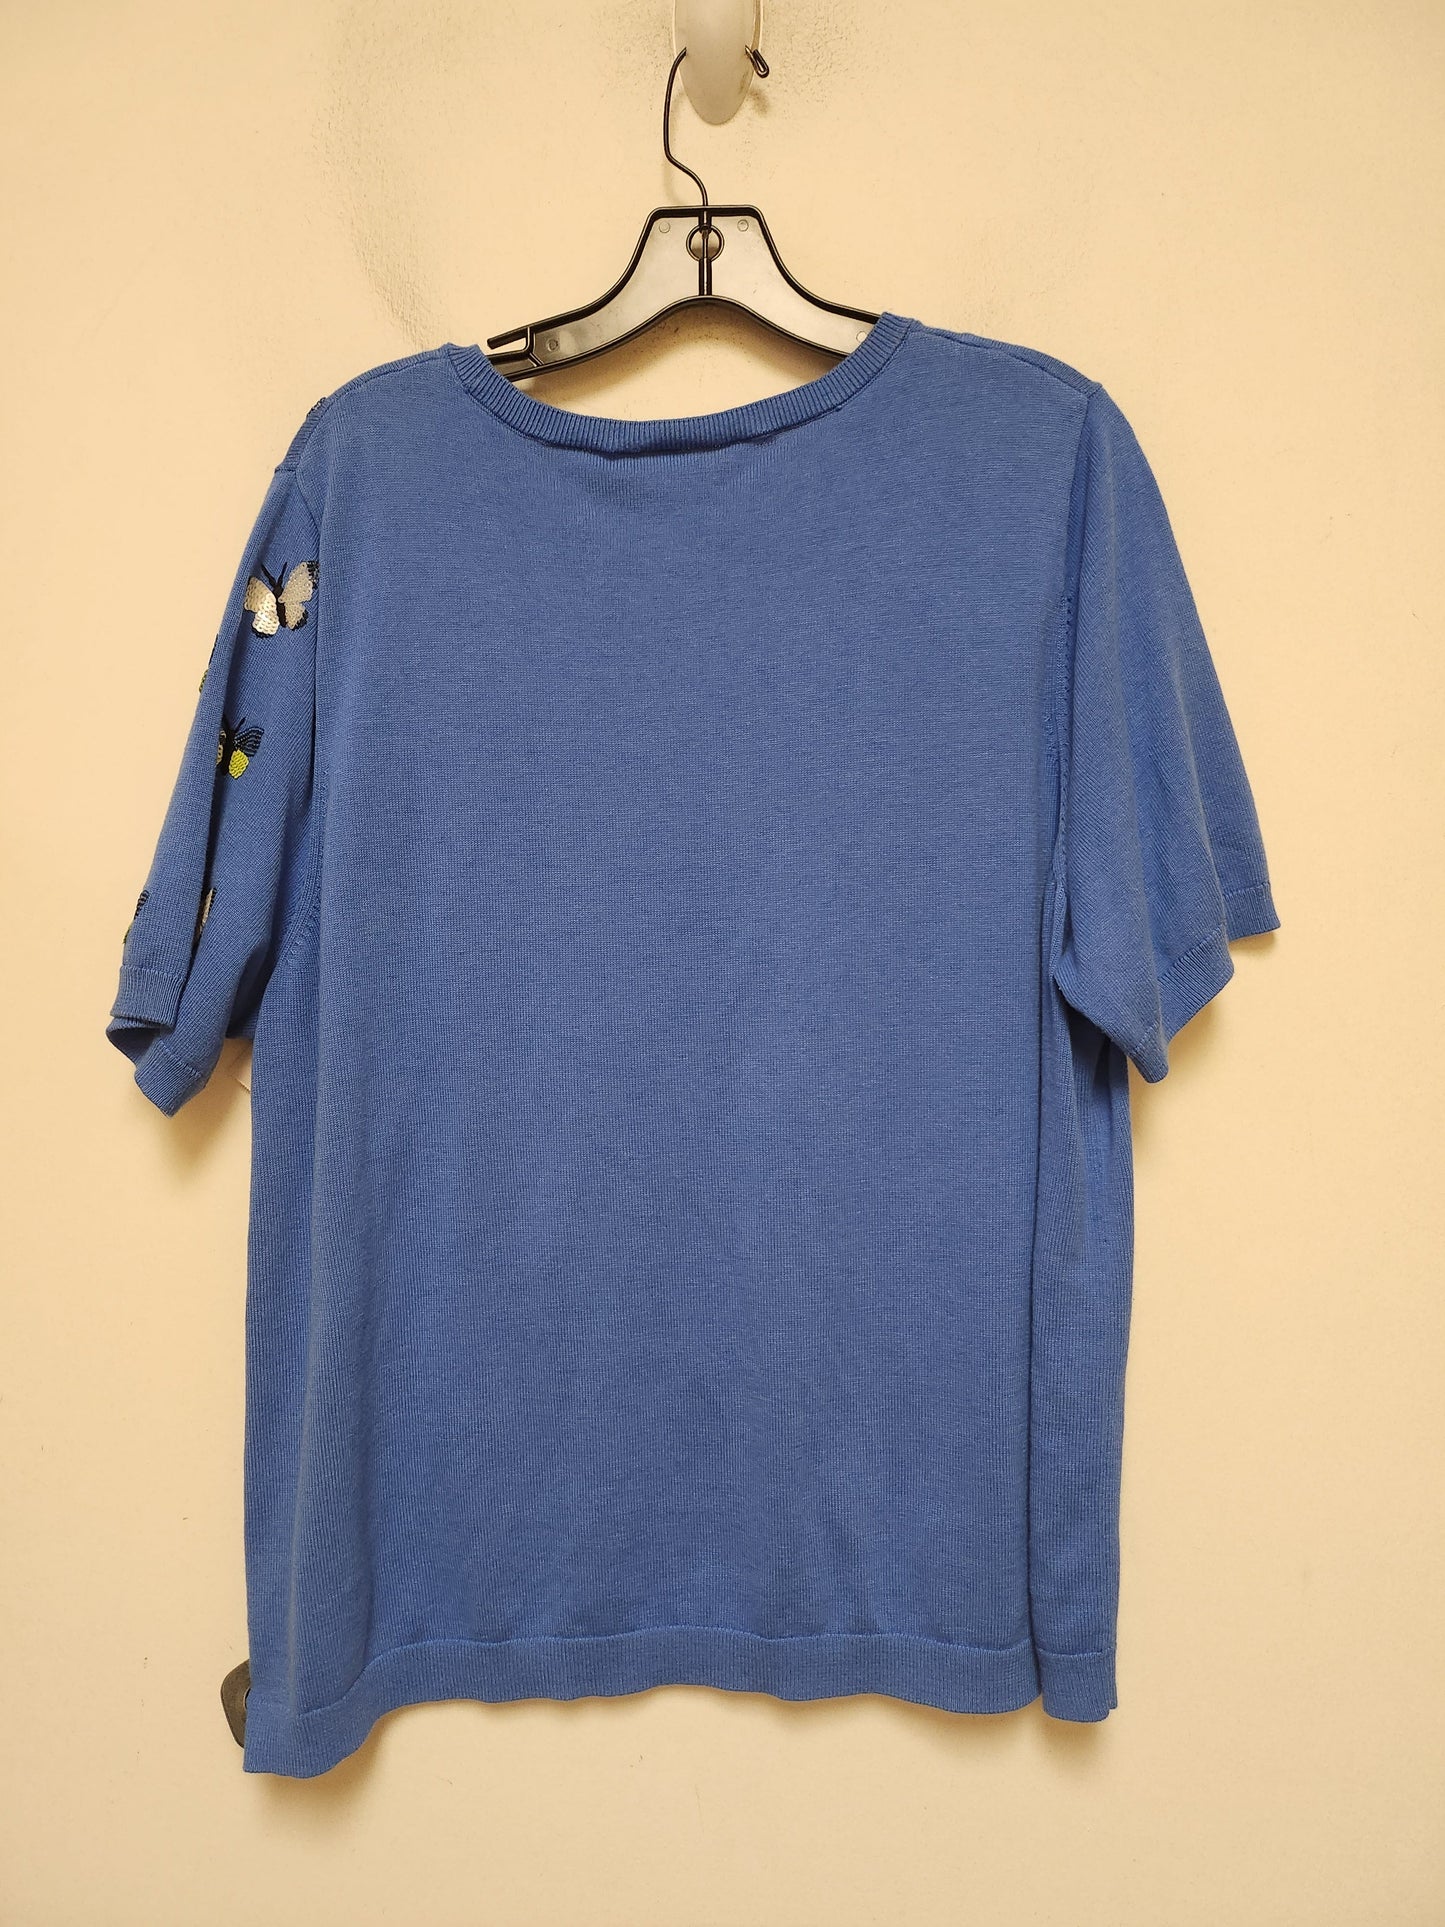 Blue Top Short Sleeve Talbots, Size 3x